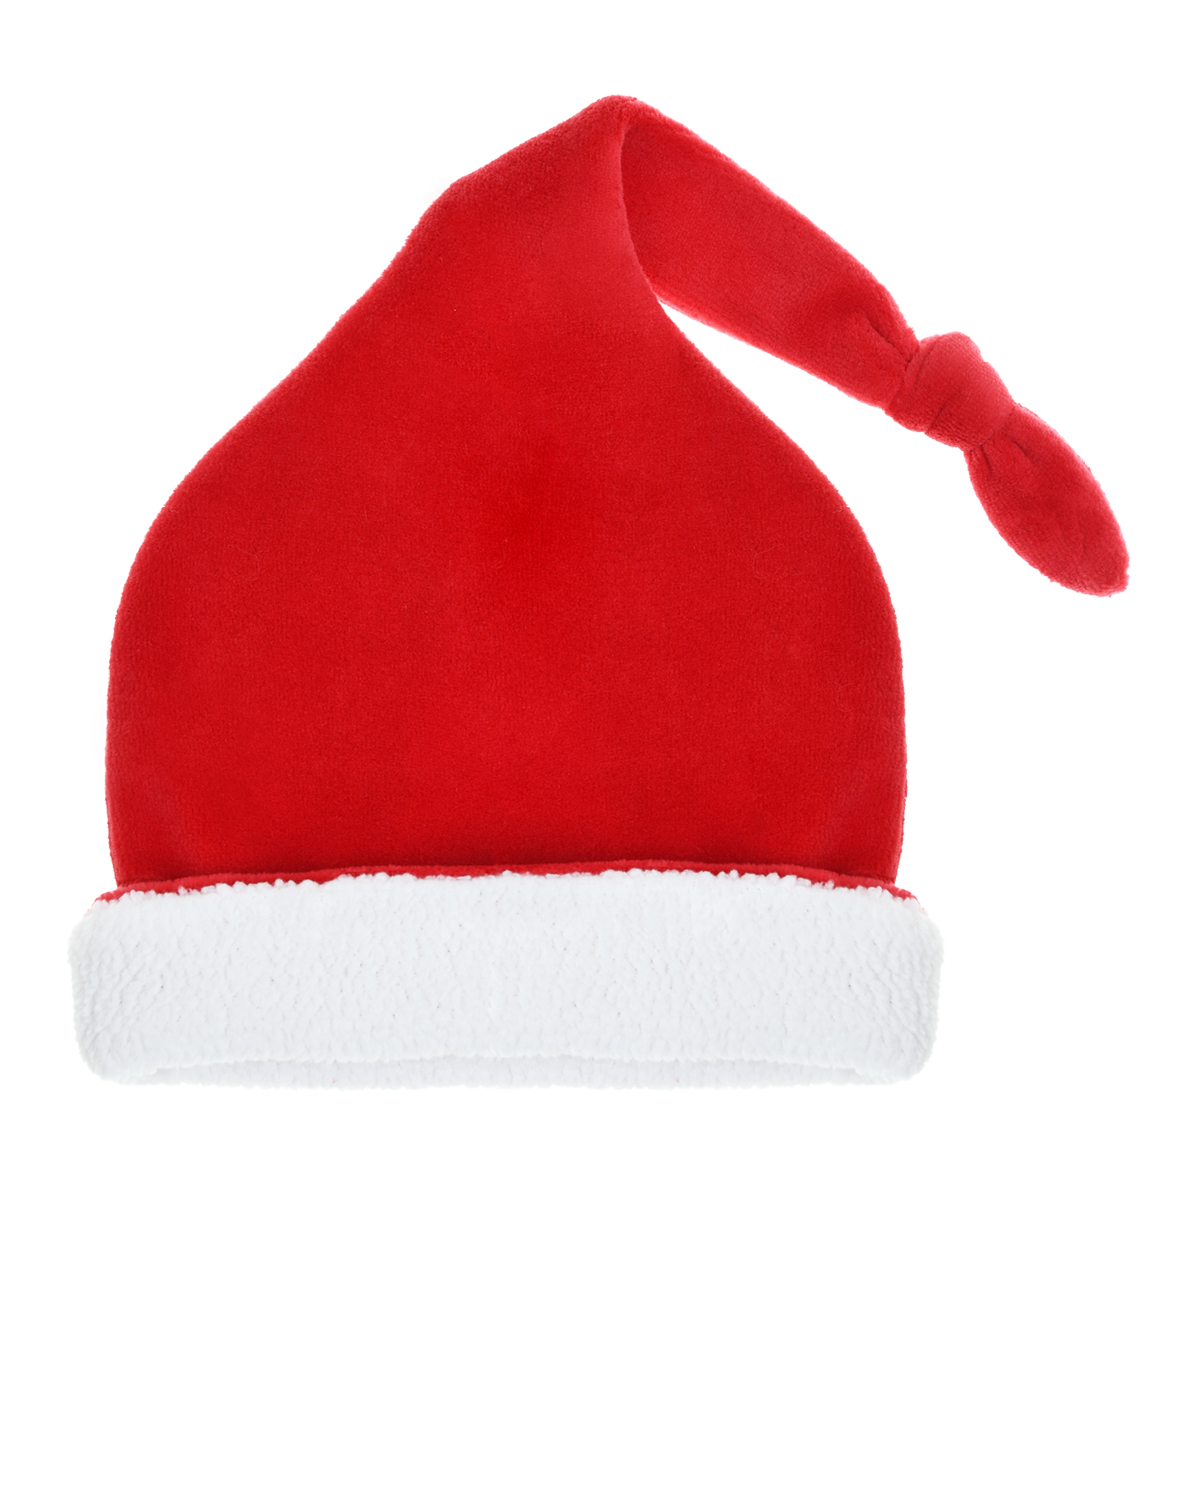 Красная шапка-колпак с белой опушкой Kissy Kissy, размер 56, цвет красный - фото 1